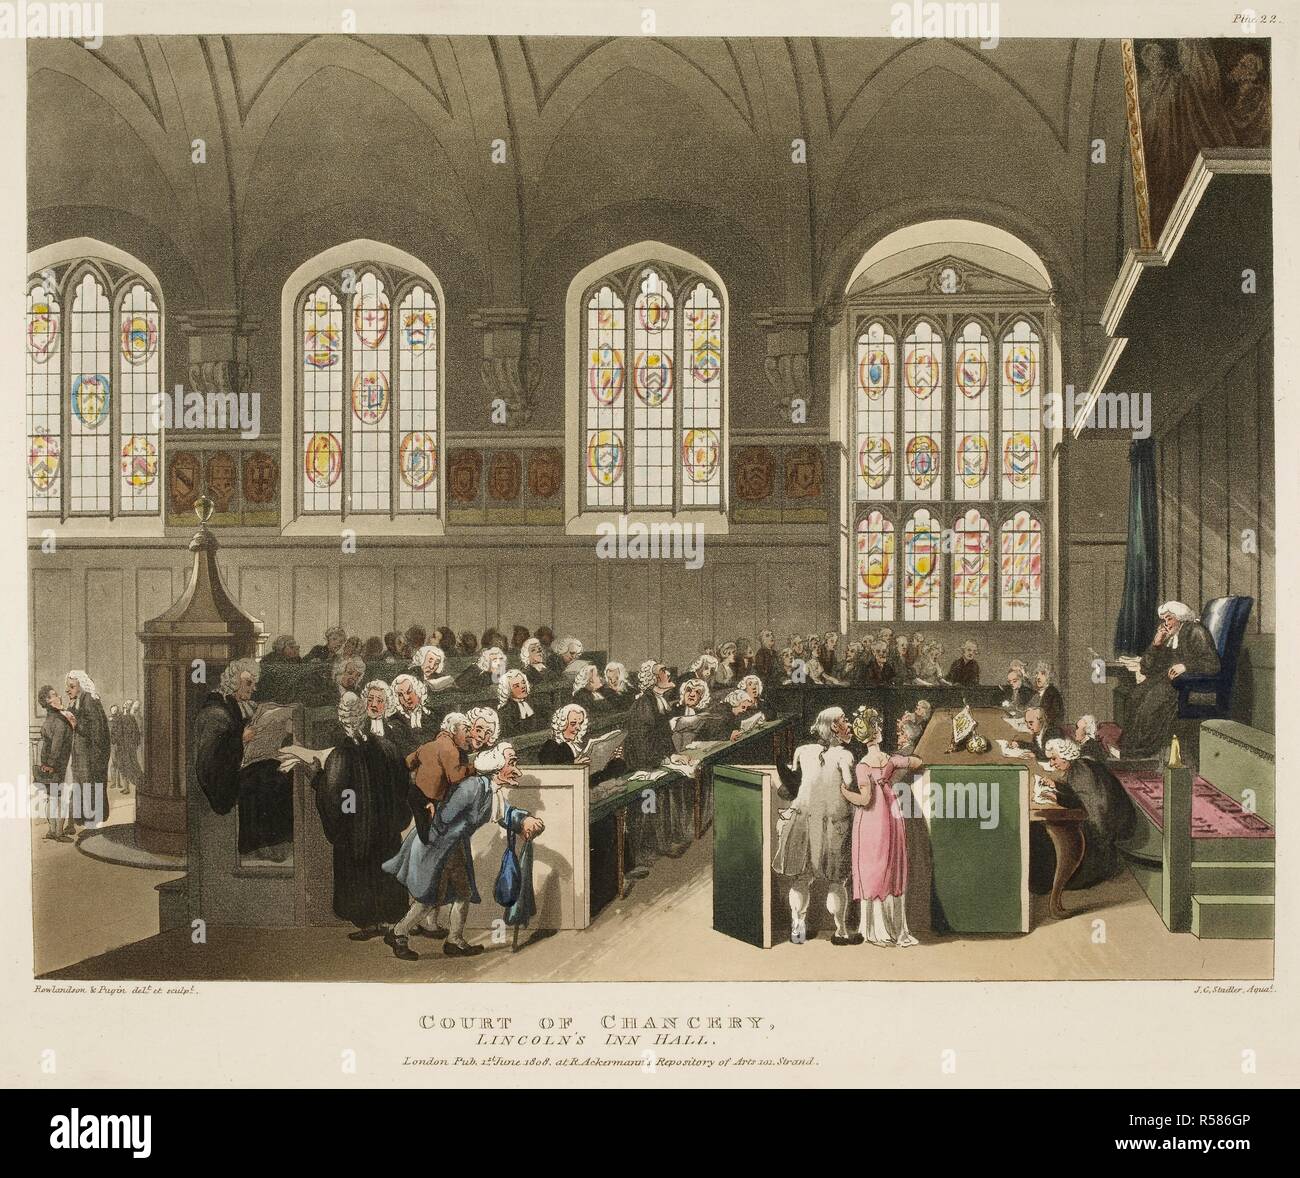 Court House Chancery. The Microcosm of London. R. Ackermann: London, 1808 - 1811. Source: 190.e.1, 193. Language: English. Author: ROWLANDSON, THOMAS. Pugin, A. C.Rowlandson. Pyne, William. Pugin. Stock Photo